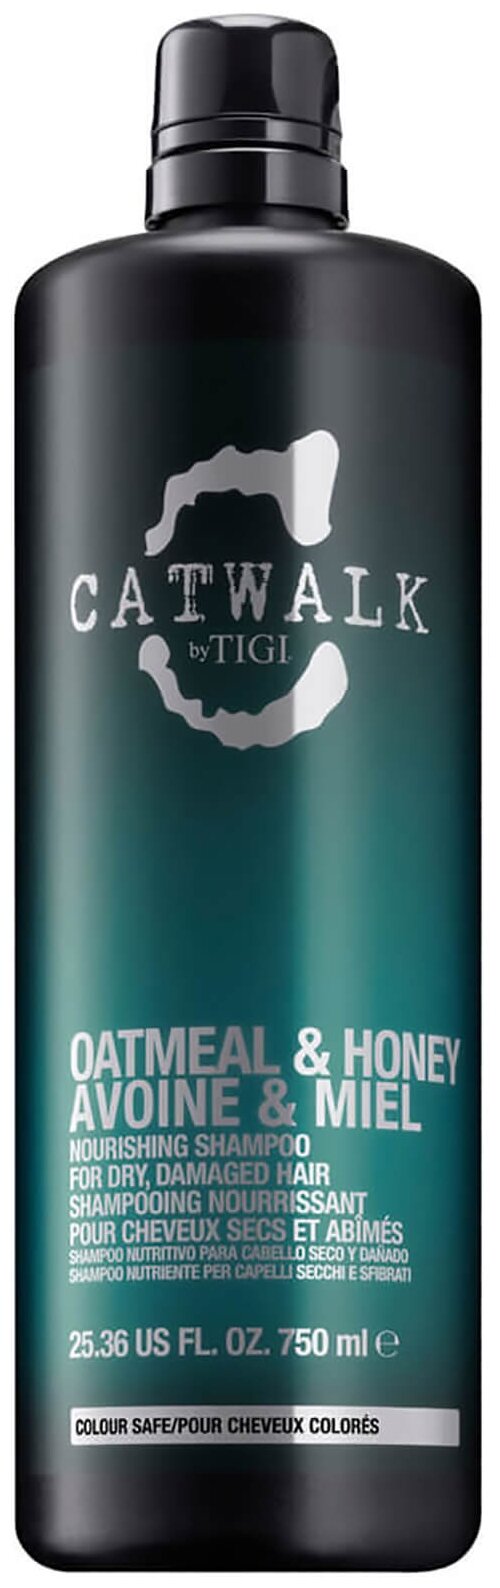 Catwalk by TIGI шампунь Catwalk Oatmeal & Honey для питания сухих и ломких волос, 750 мл